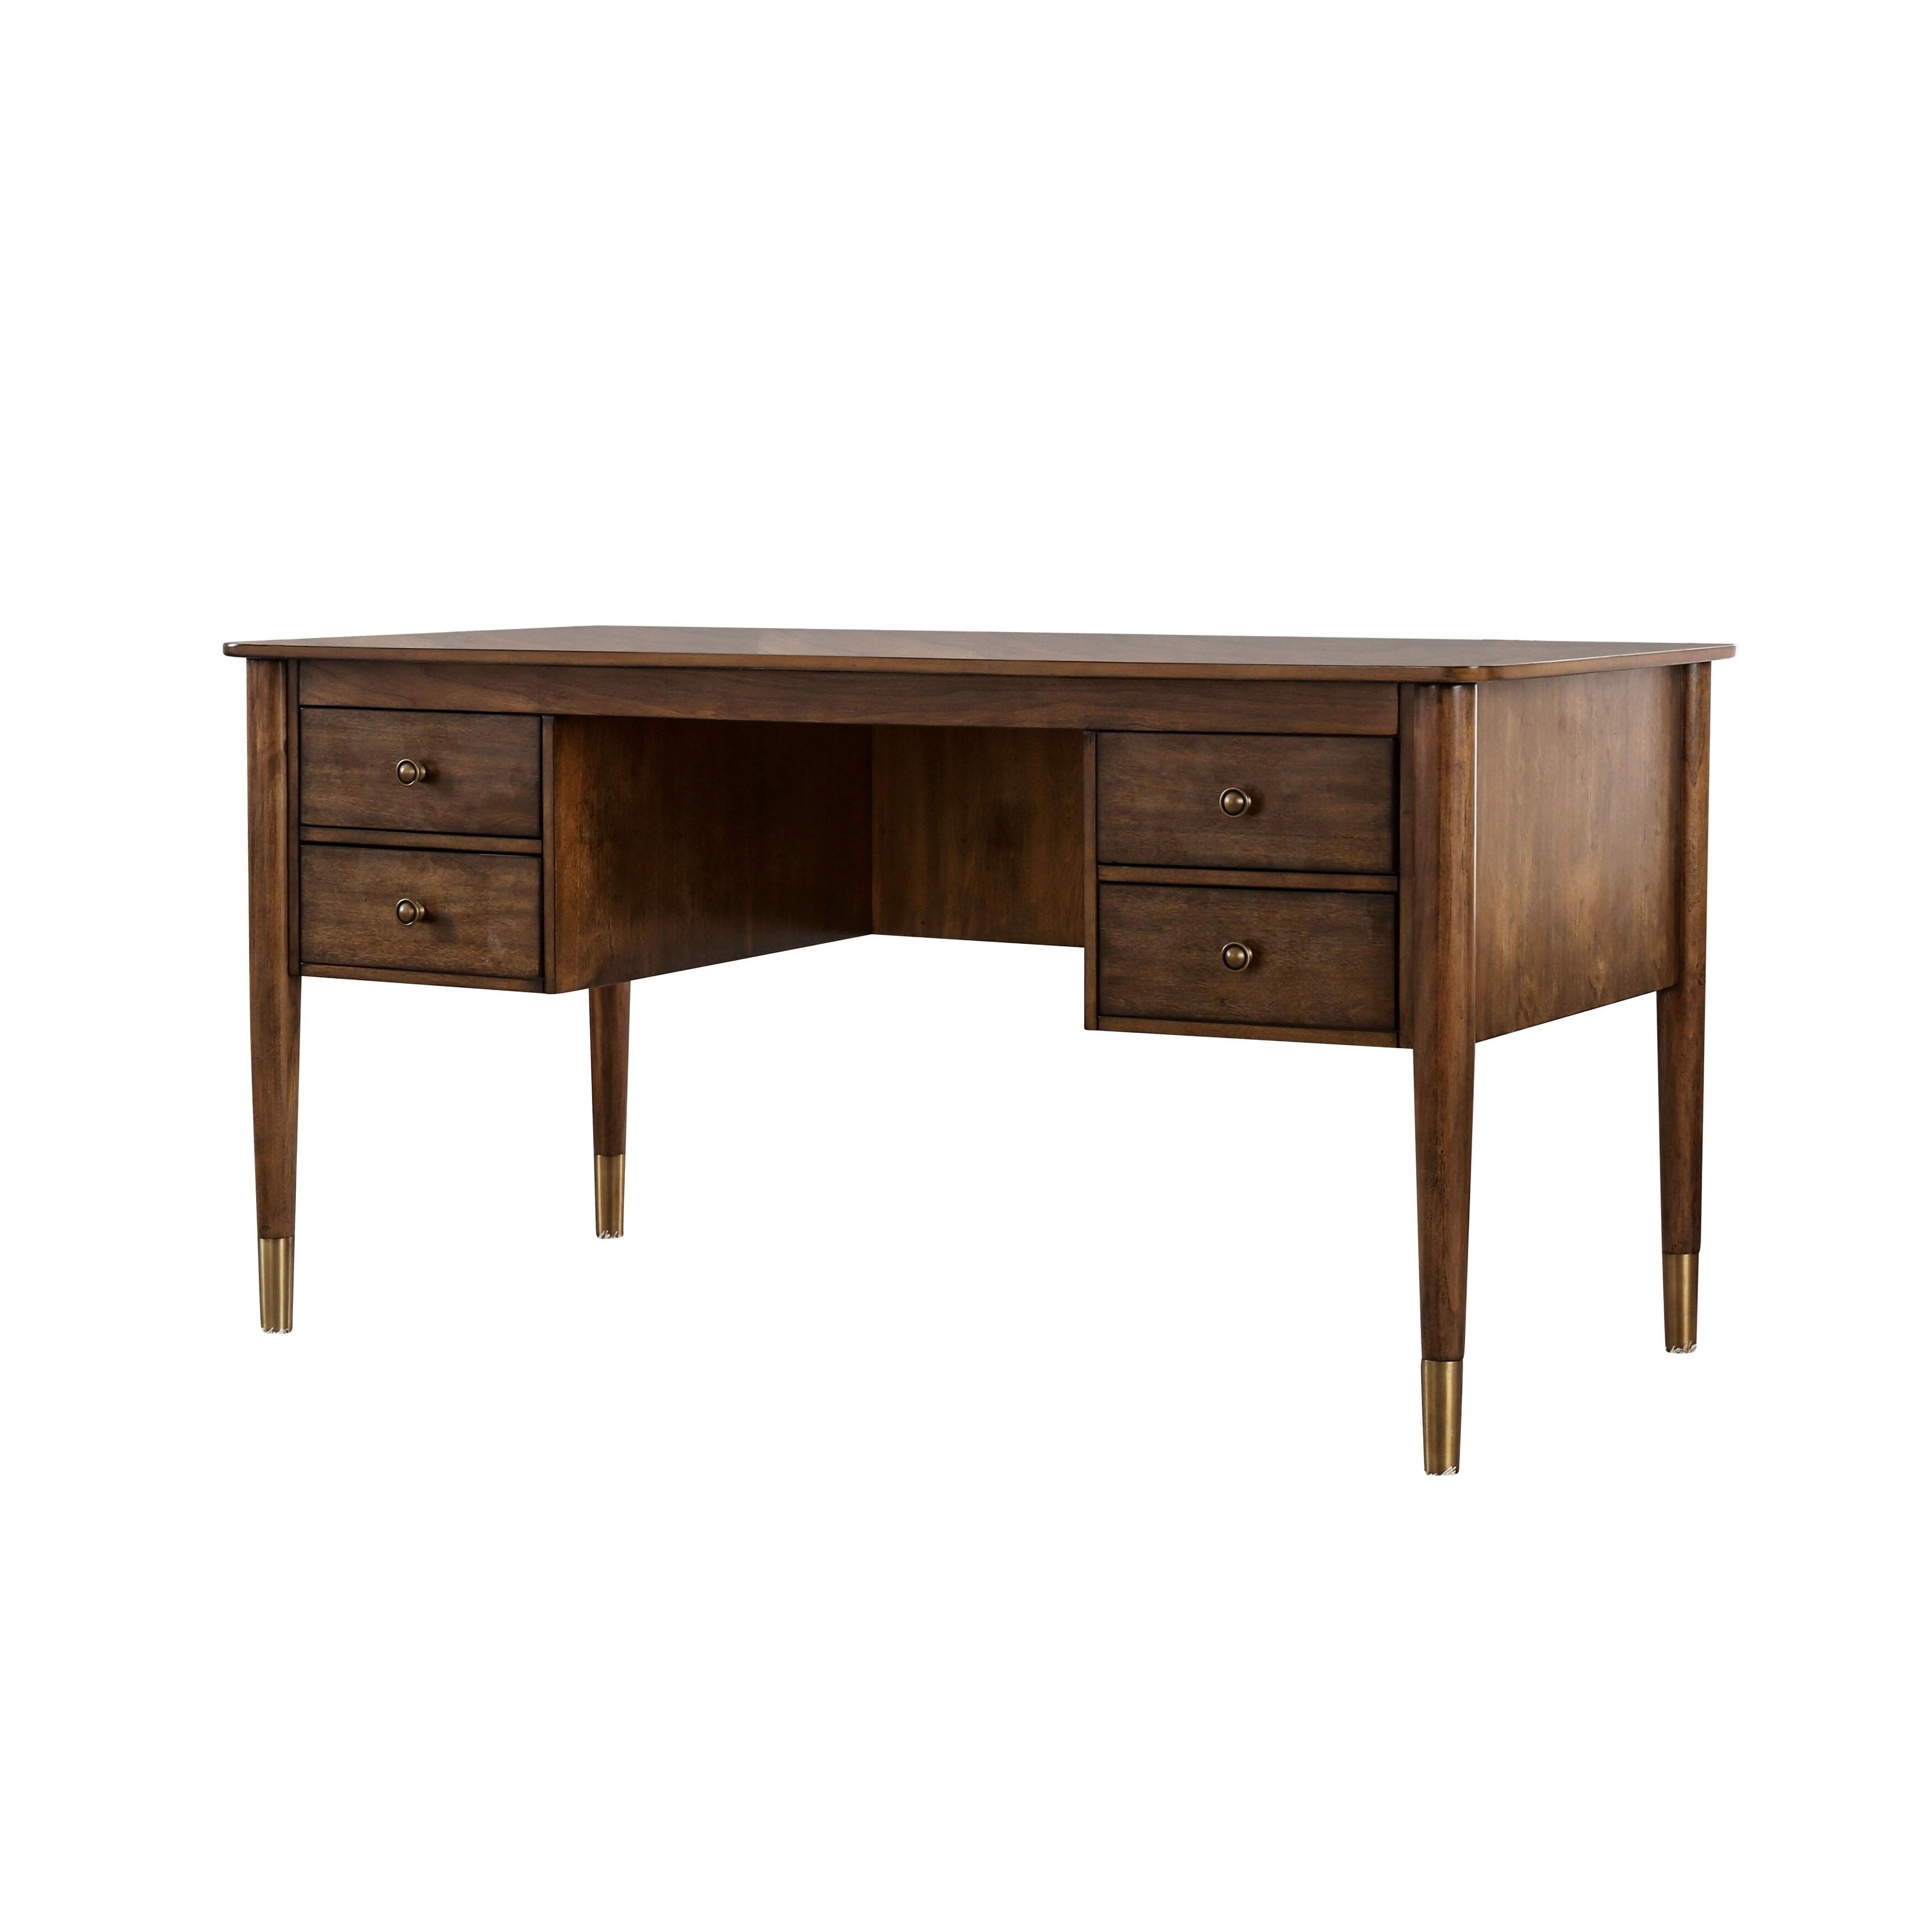 https://ak1.ostkcdn.com/images/products/23436338/Furniture-of-America-Laramie-Rustic-Antique-Oak-Writing-Desk-b83c17ca-3f6b-4158-abb0-b094230af81b.jpg